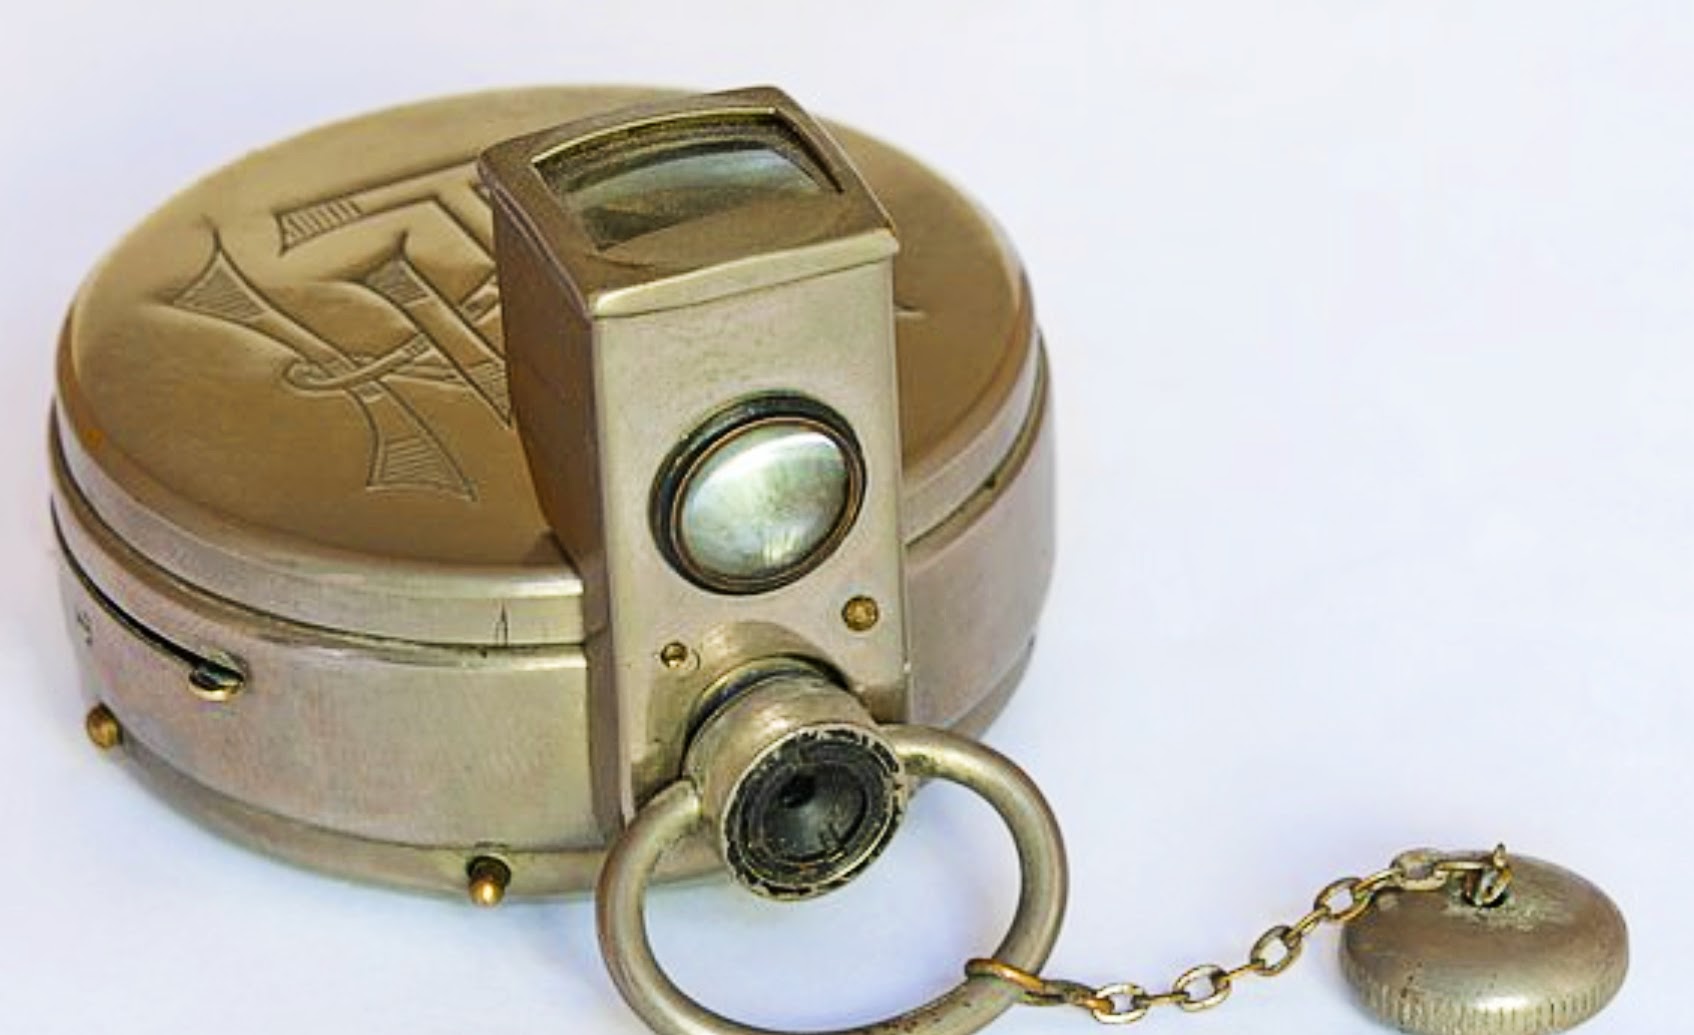 Miniature cameras were hidden in everyday devises